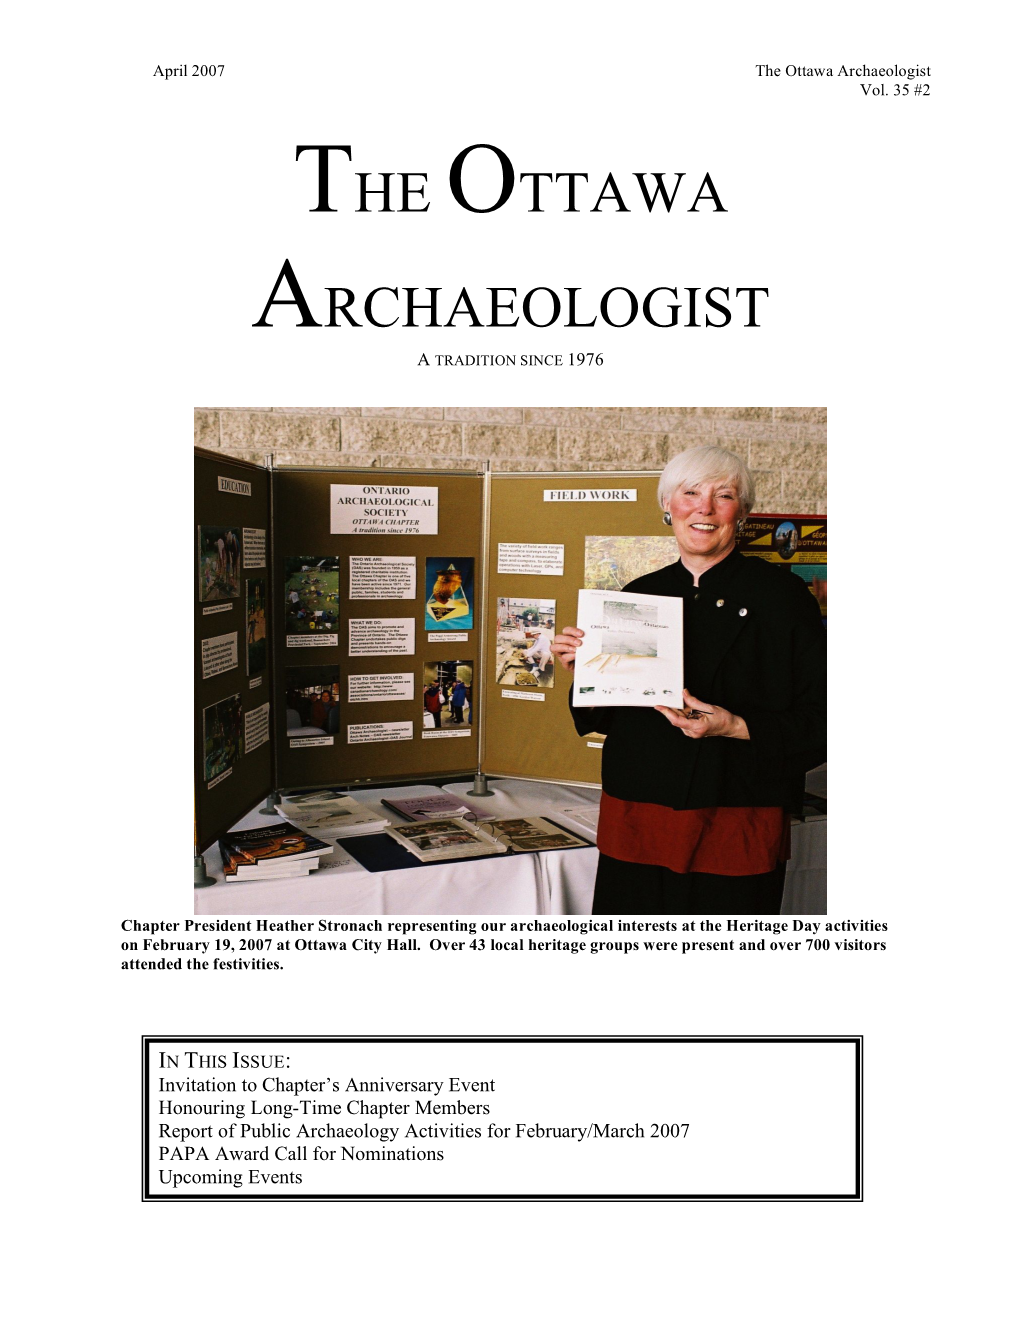 The Ottawa Archaeologist Vol